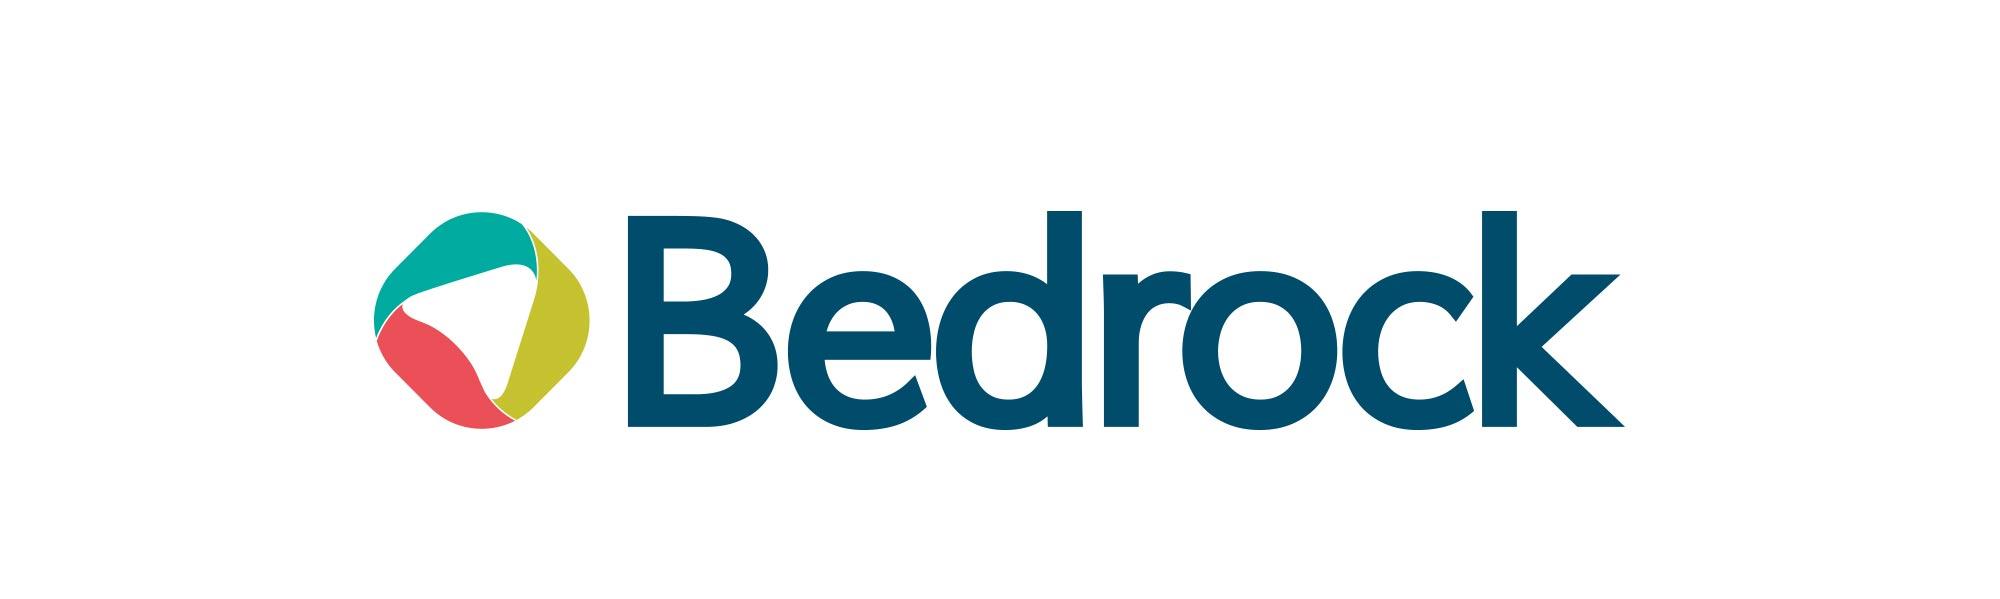 Bedrock Logo - Bedrock Tax Logo Design Branding Agency